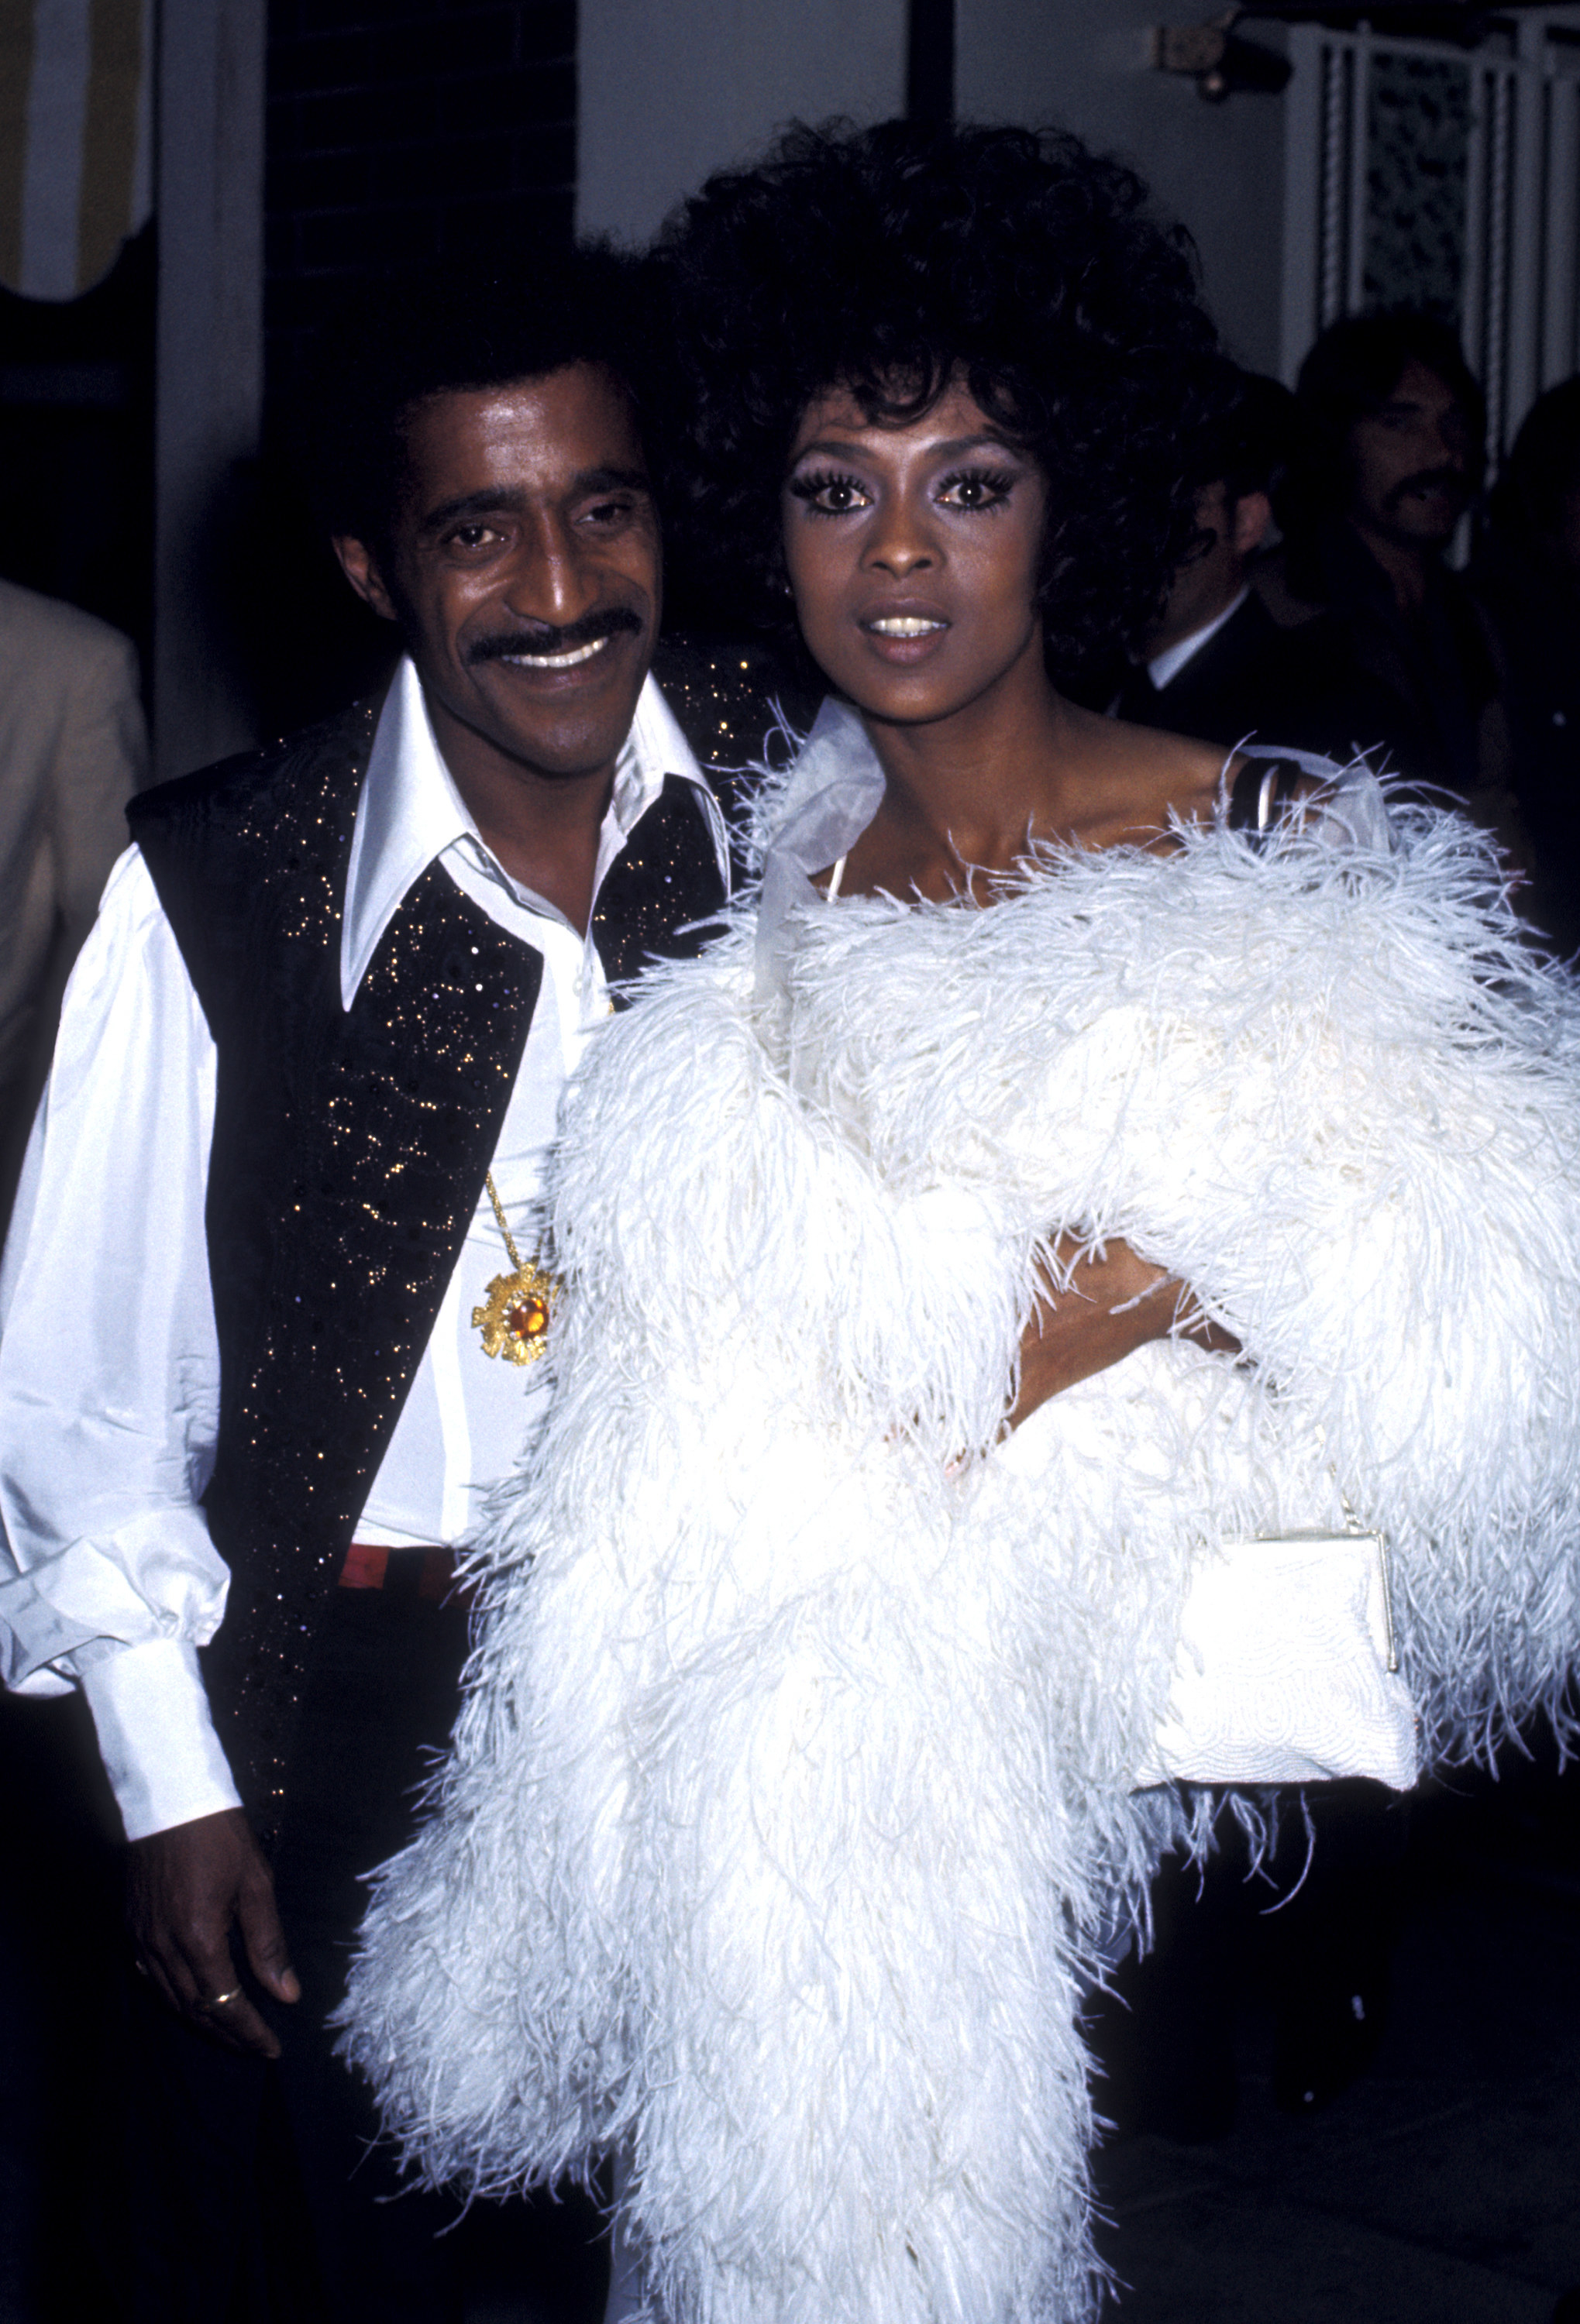 Sammy Davis Jr. and Lola Falana pose at an Oscars party on April 7, 1970